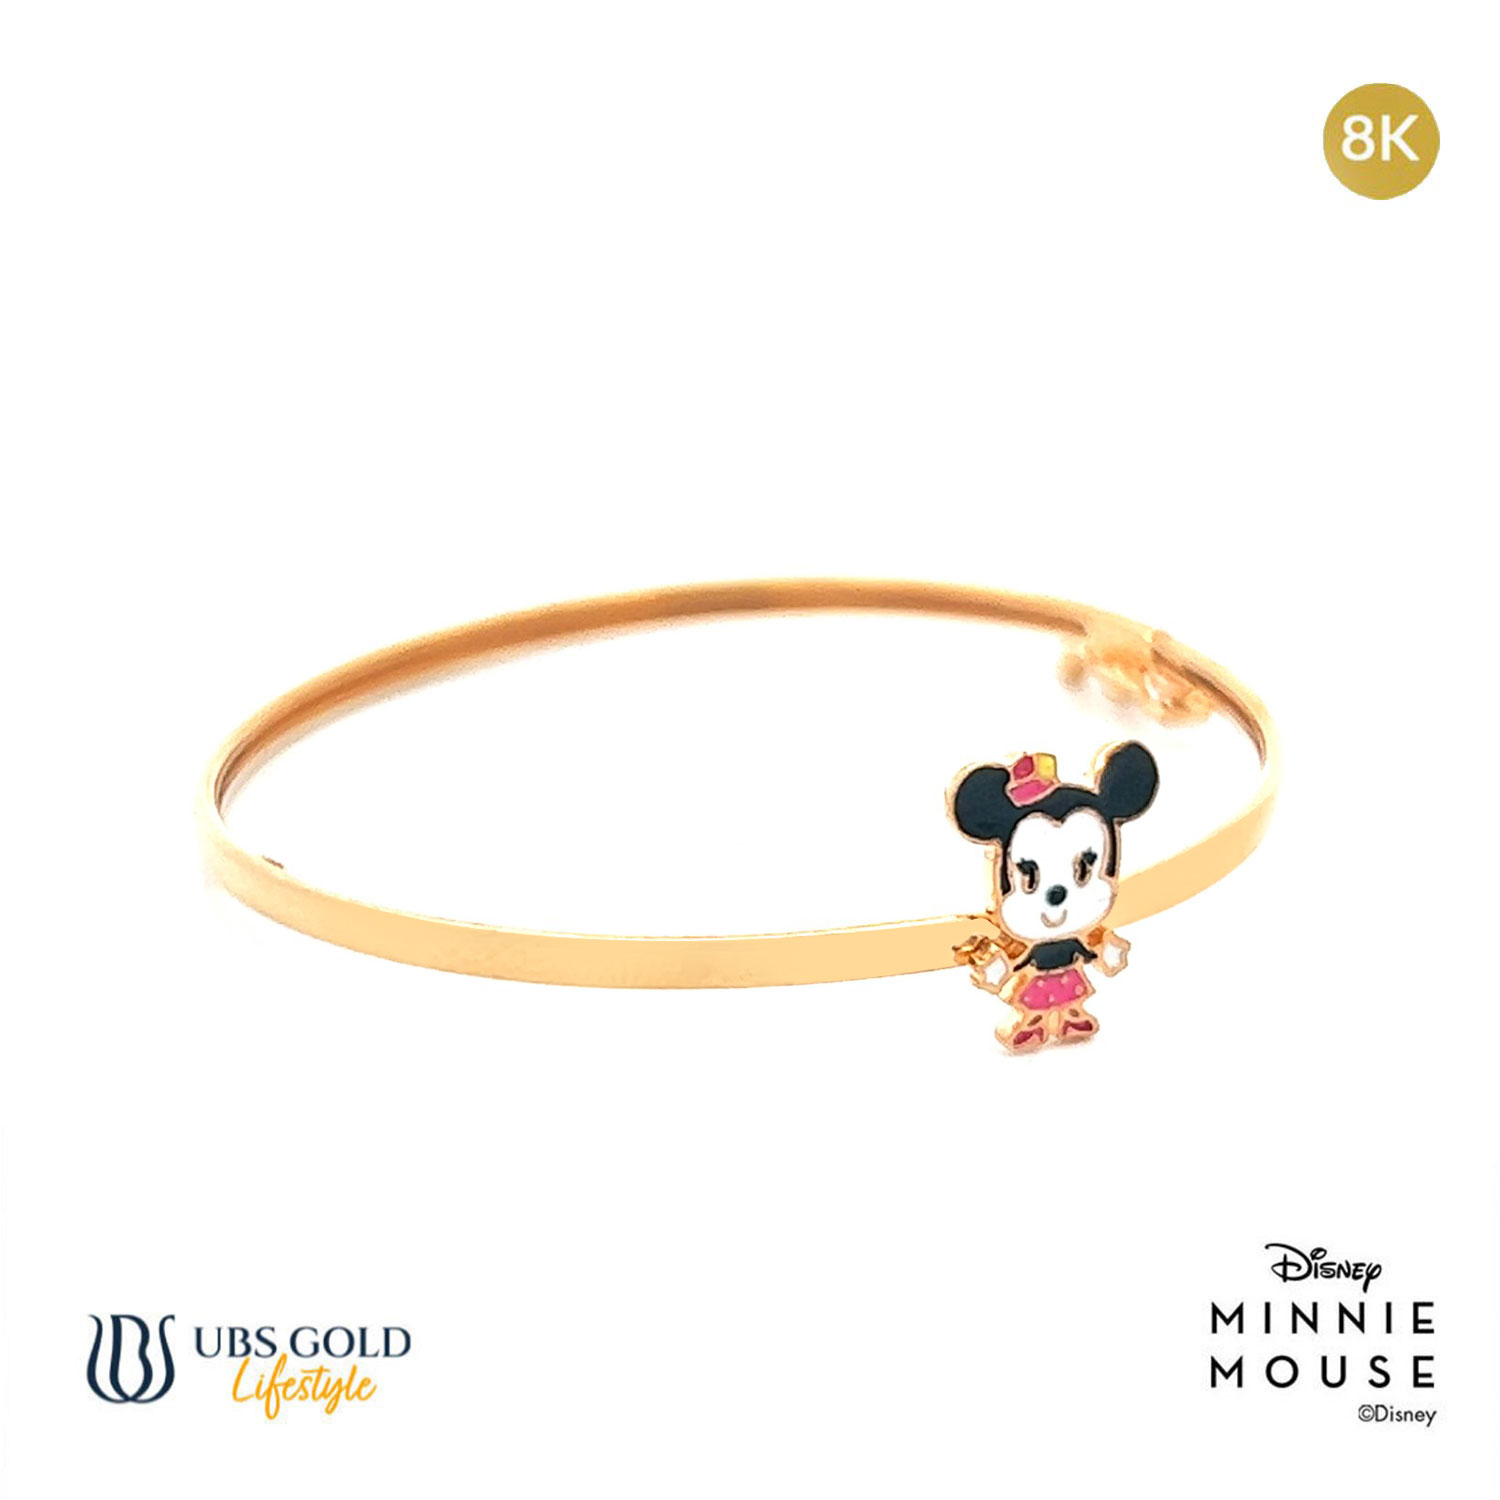 UBS Gelang Emas Bayi Disney Minnie Mouse - Vgy0010 - 8K